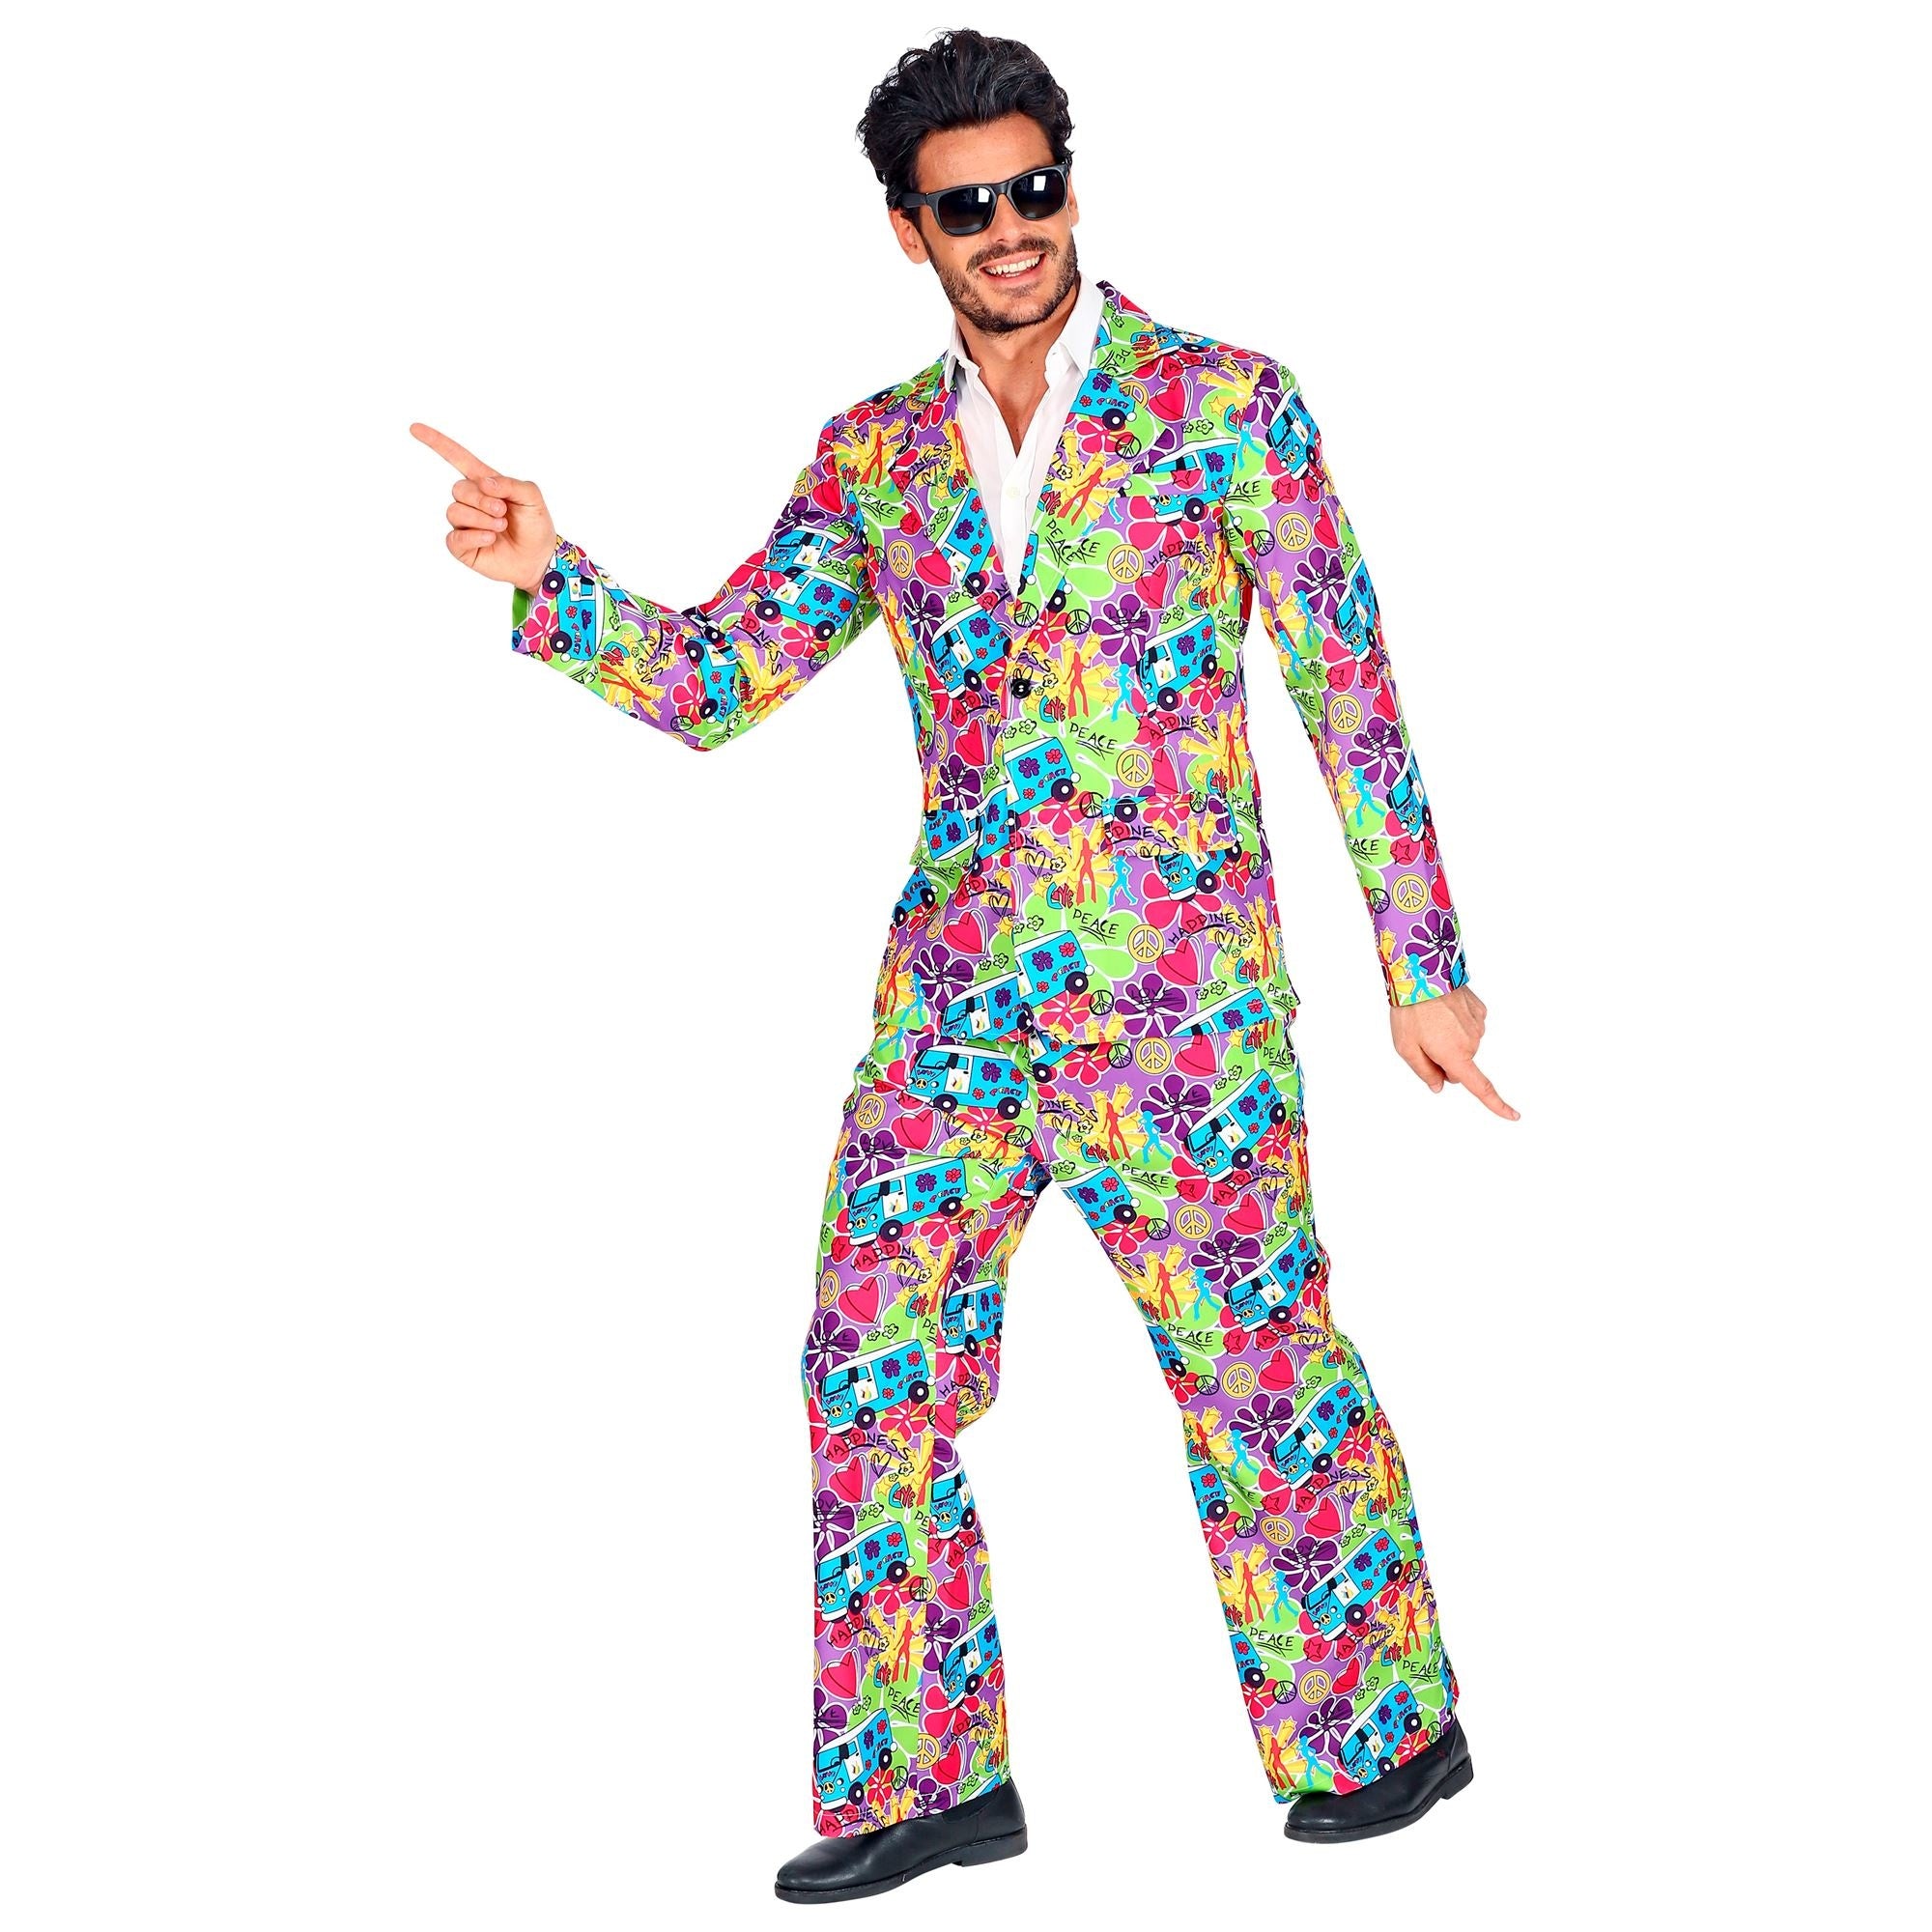 Widmann - Hippie Kostuum - Vrolijke Kleurige Hippie Symbolen - Man - multicolor - Medium - Carnavalskleding - Verkleedkleding